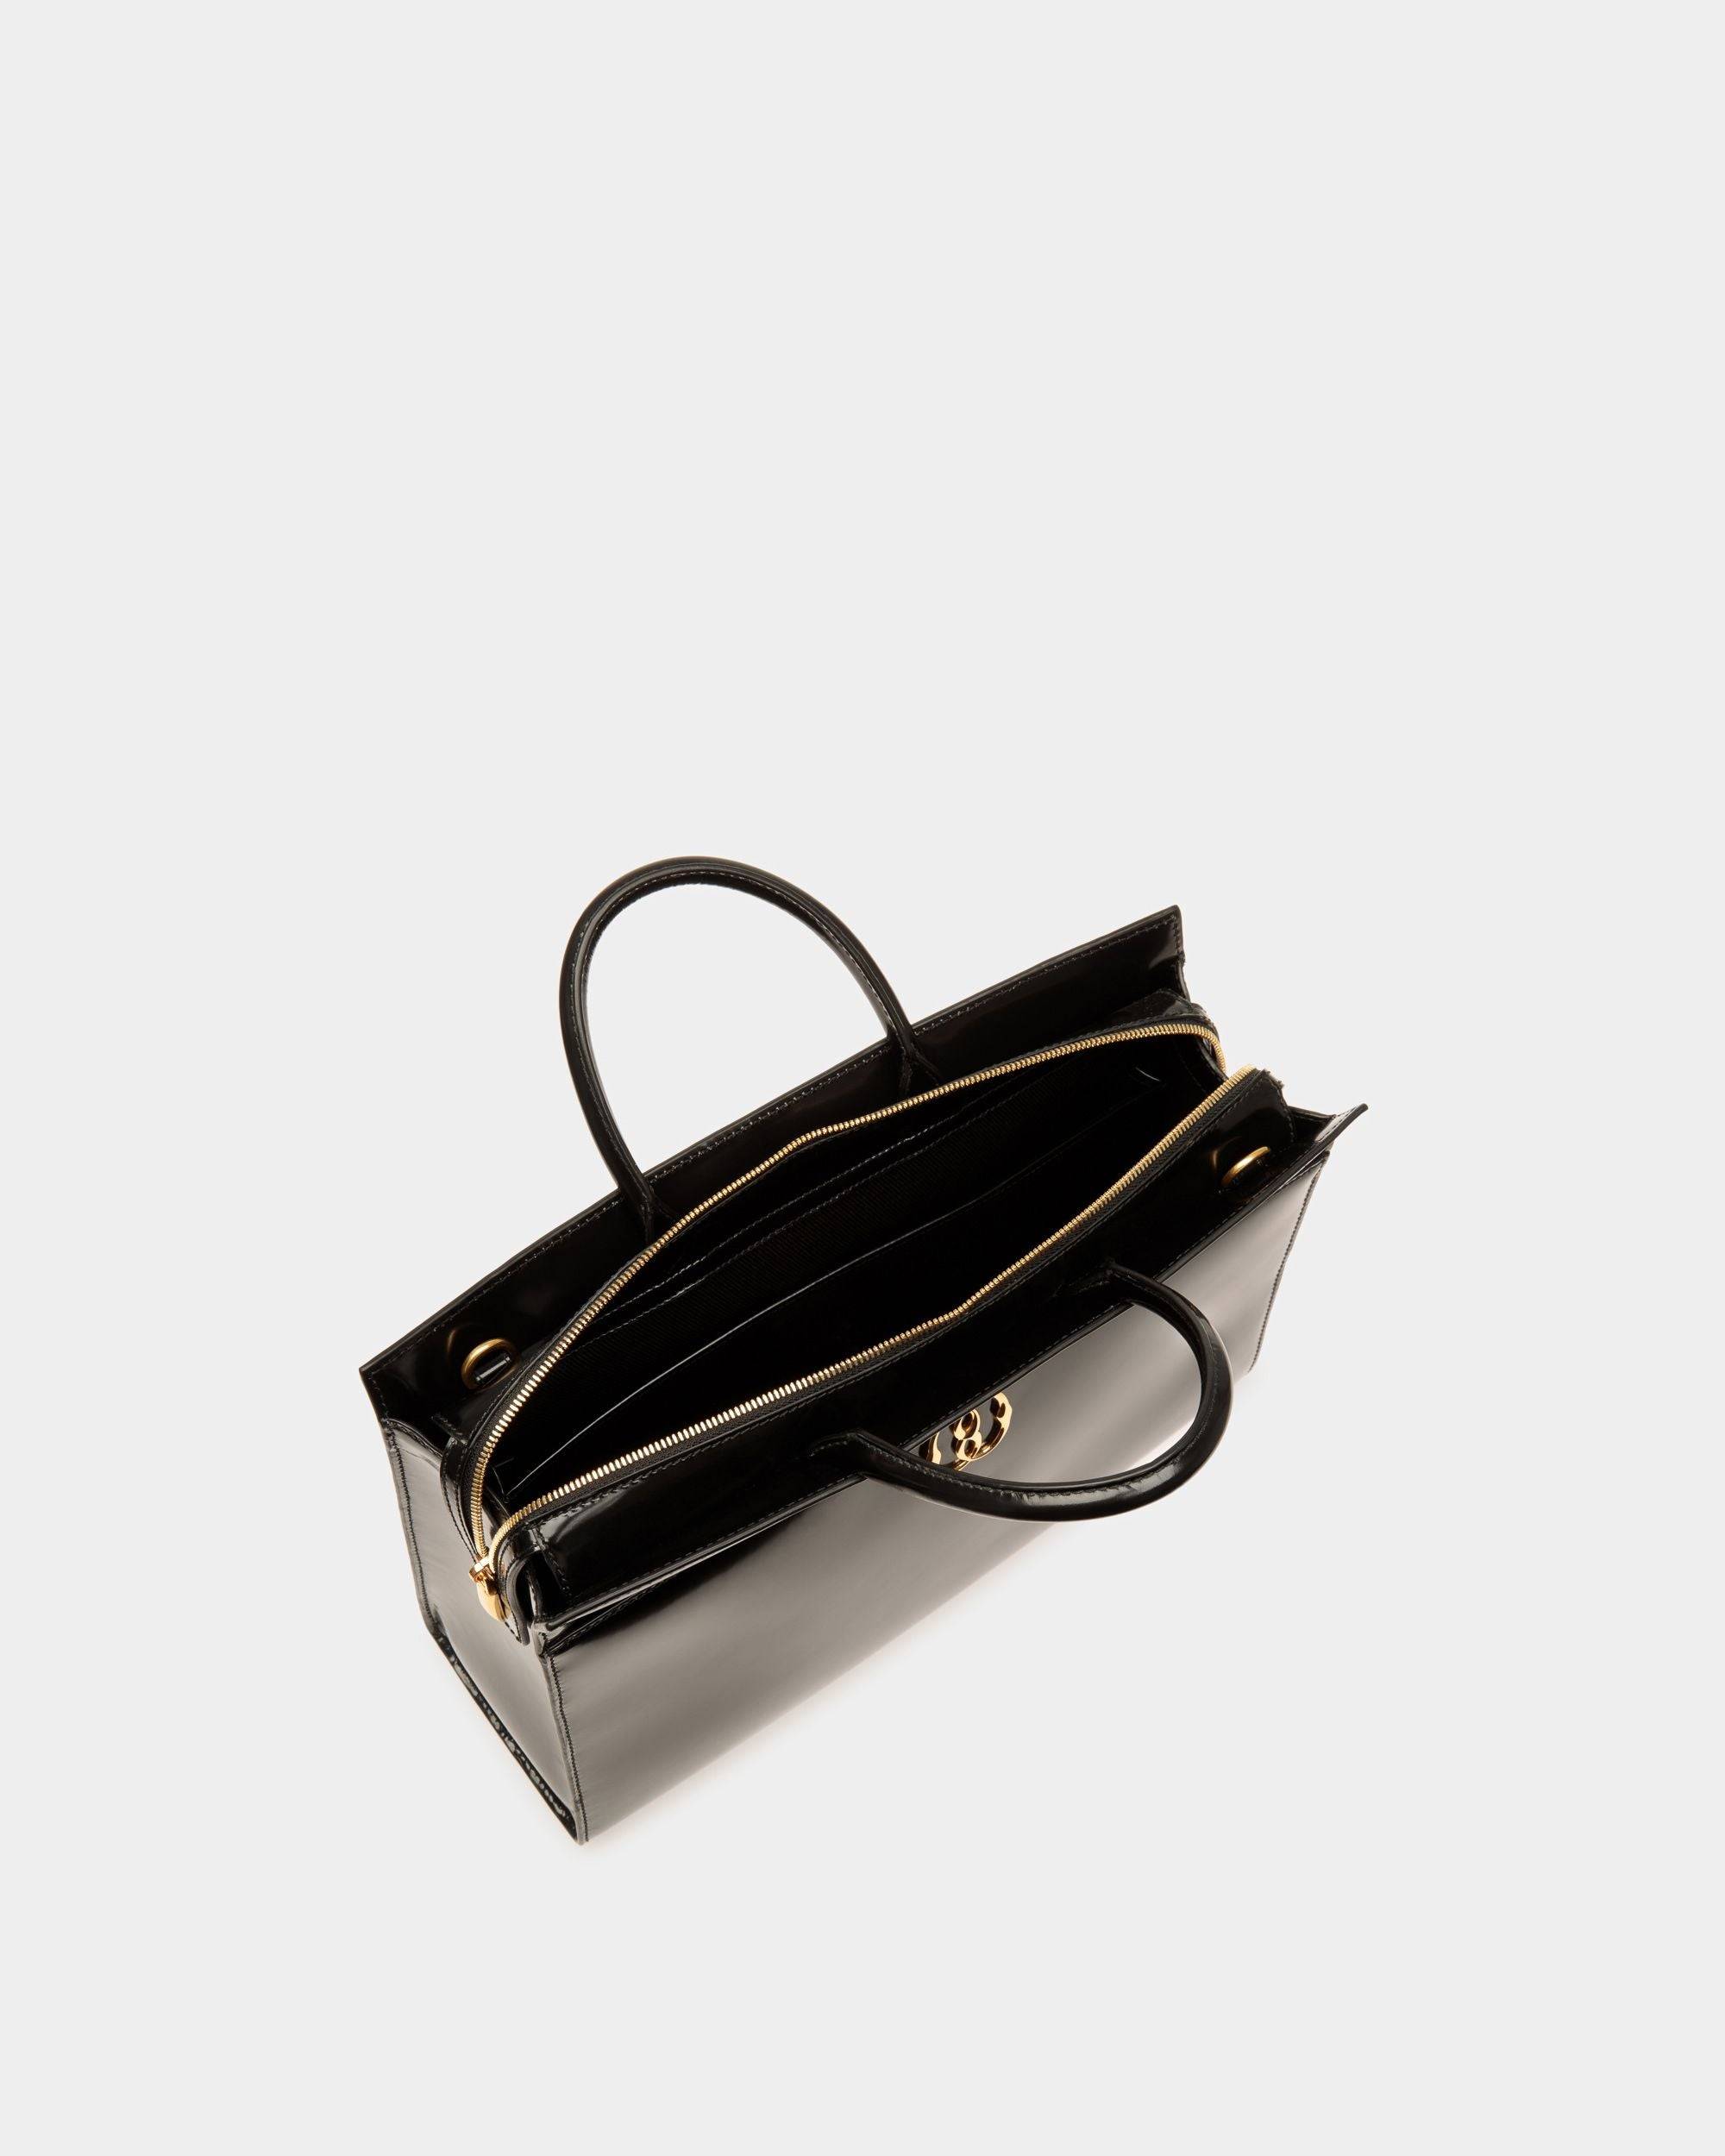 Emblem | Women's Tote Bag in Black Brushed Leather | Bally | Still Life Open / Inside